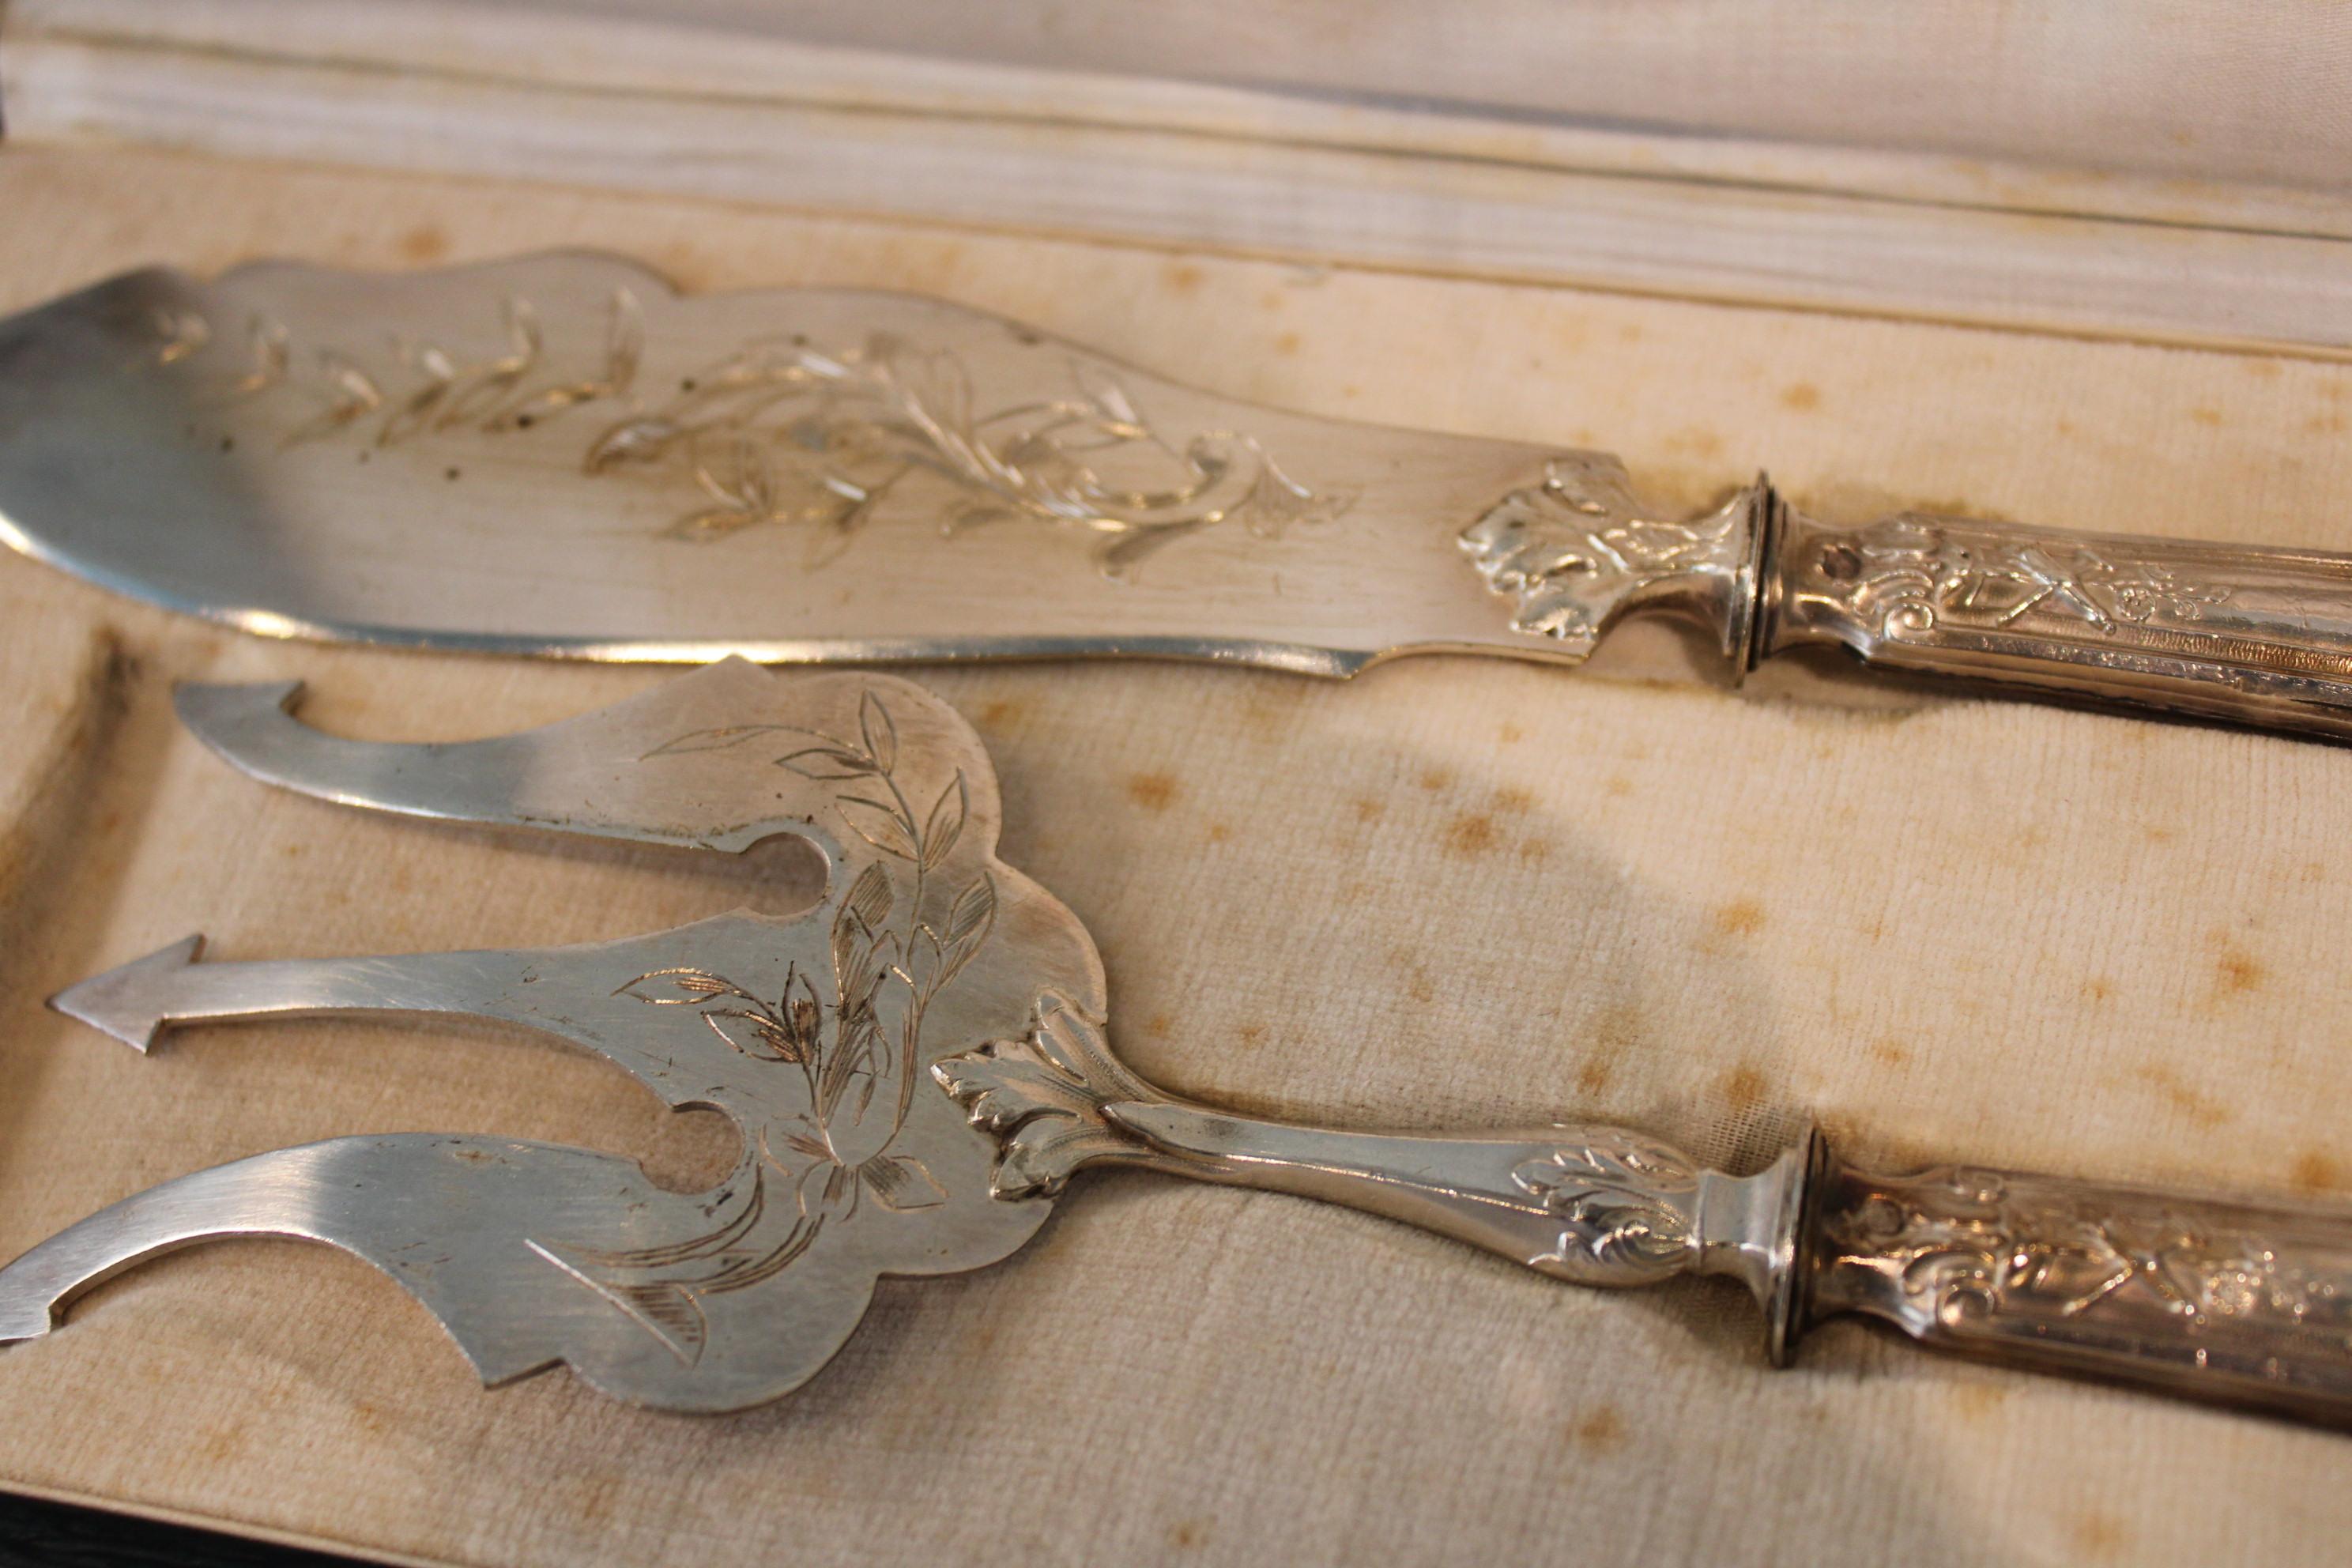 Silver metal fish cutlery

Knife dimension : H 29 cm
Fork dimension : H 26 cm
Box dimensions : 33 x 15 x 4 cm